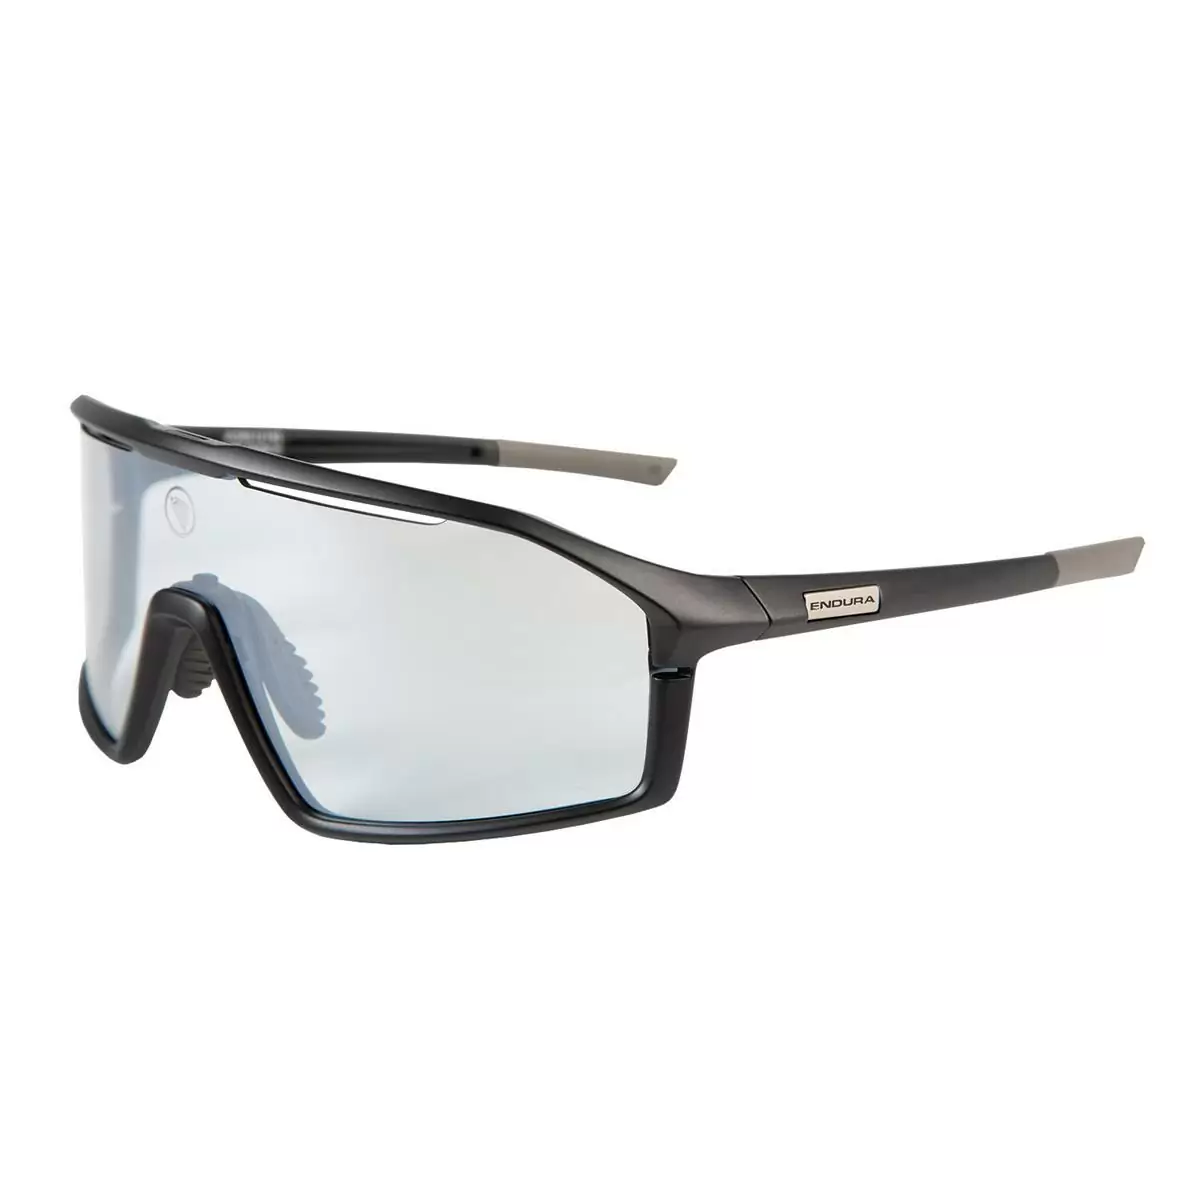 Gabbro II Photochromic Black Sunglasses - image